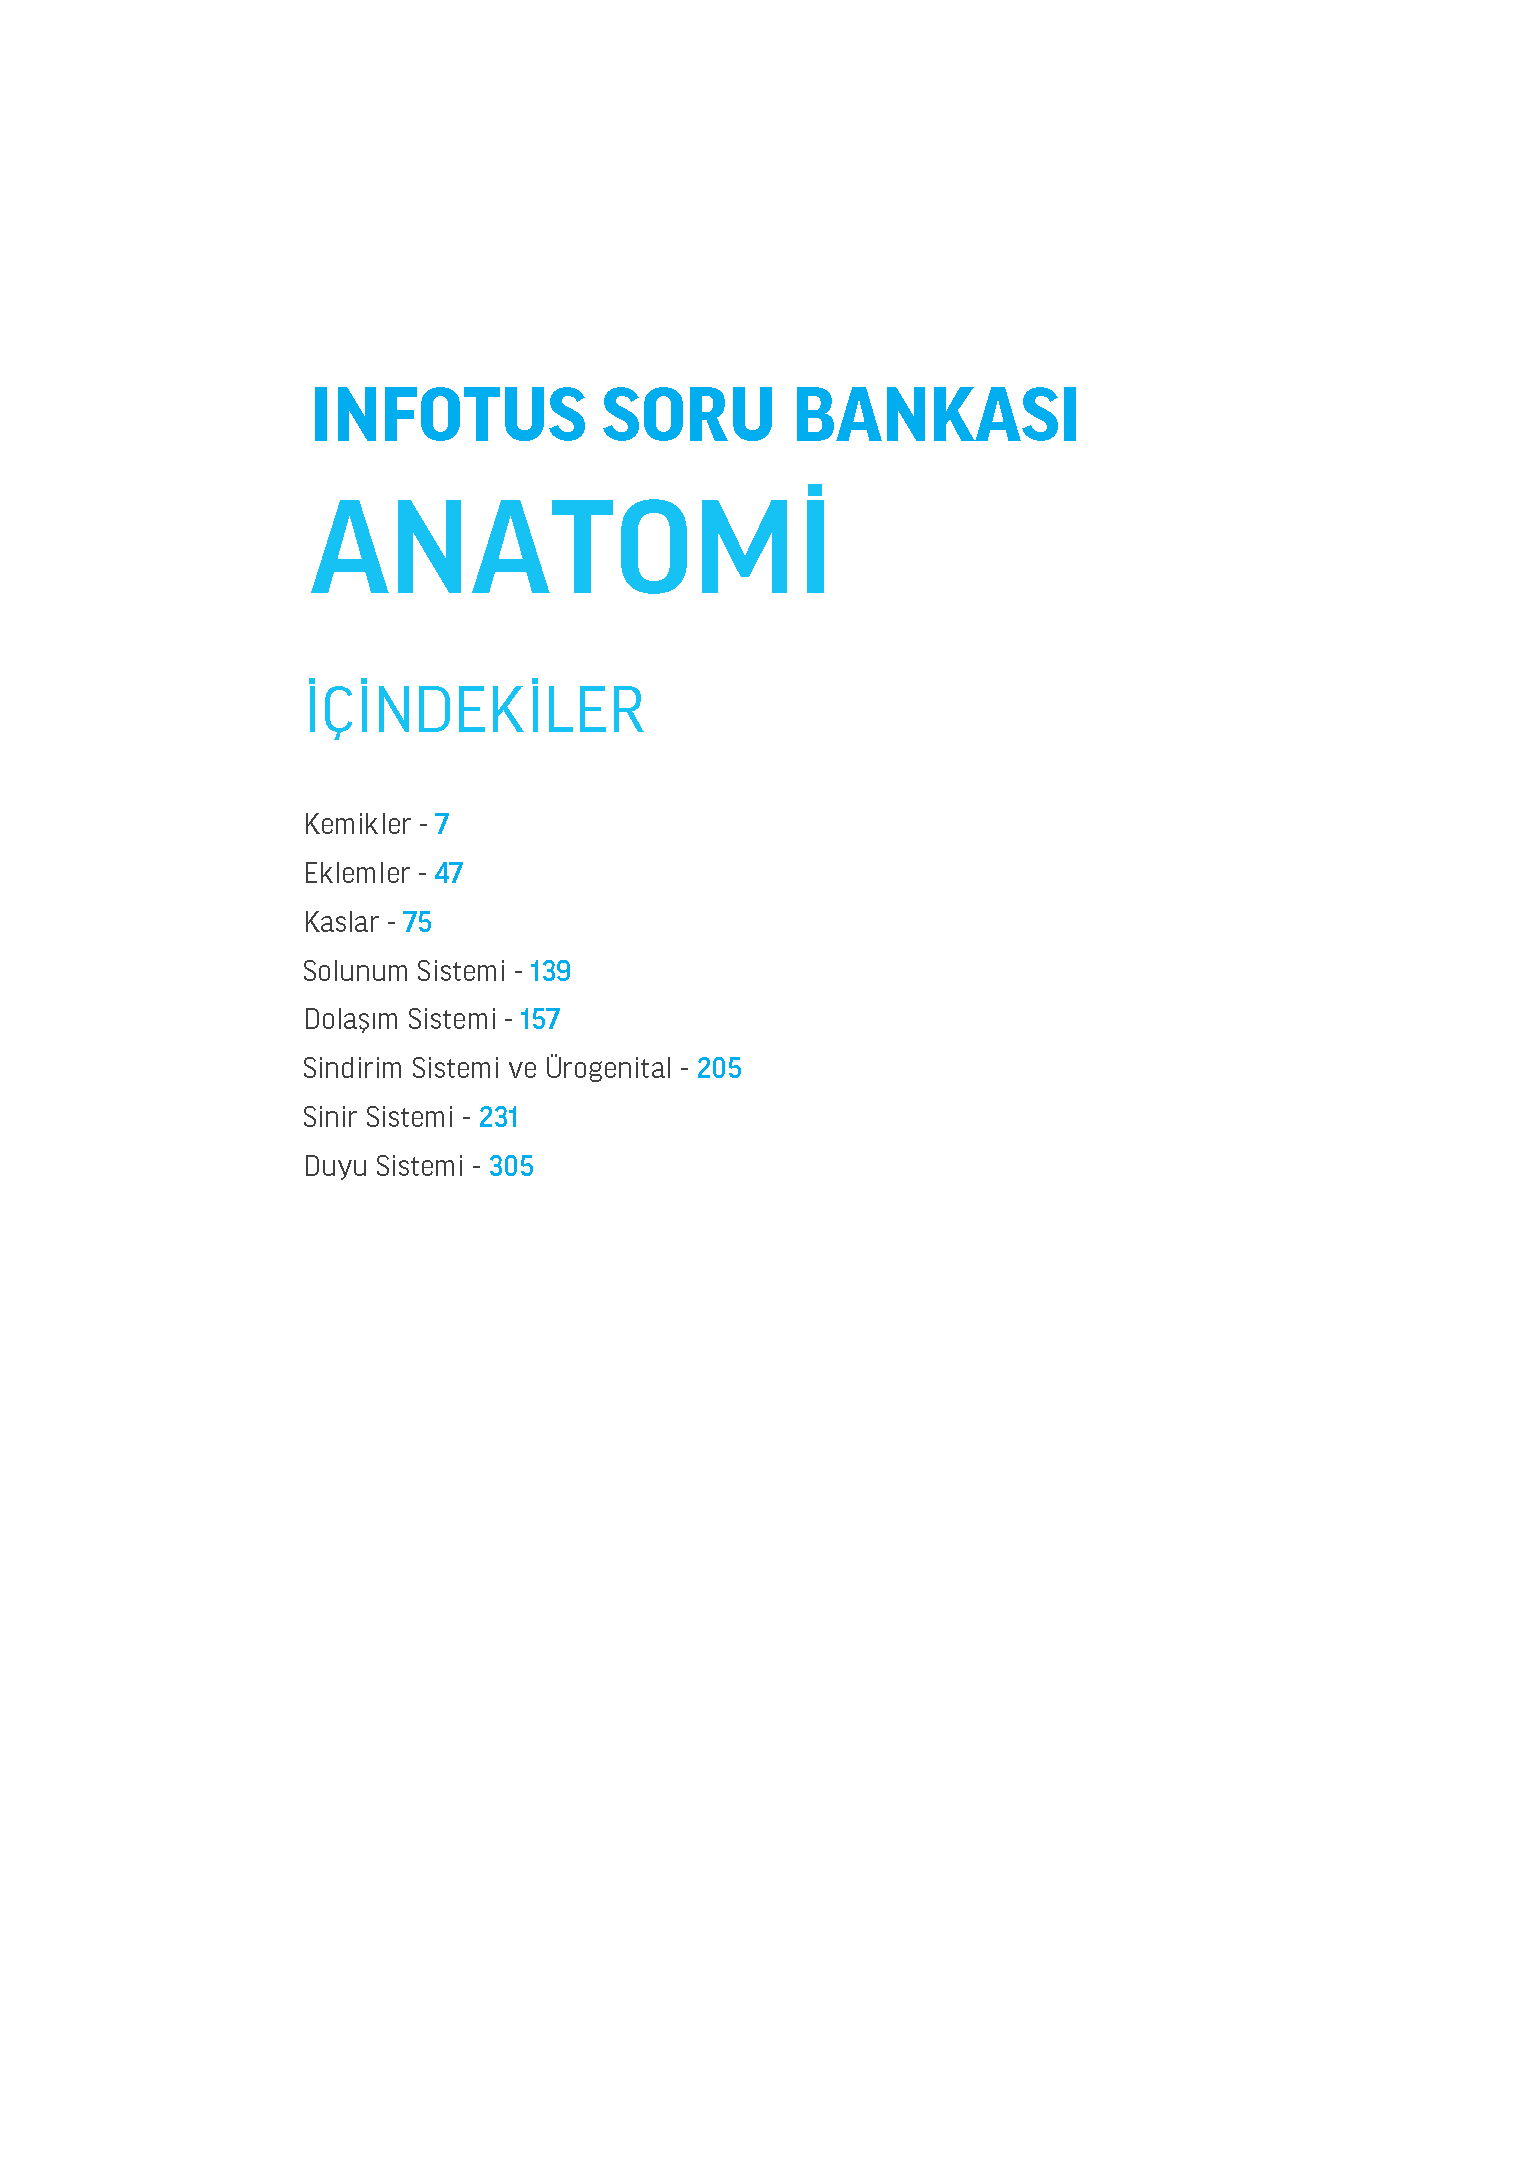 INFOTUS SORU BANKASI ANATOMI (1)_Page_003